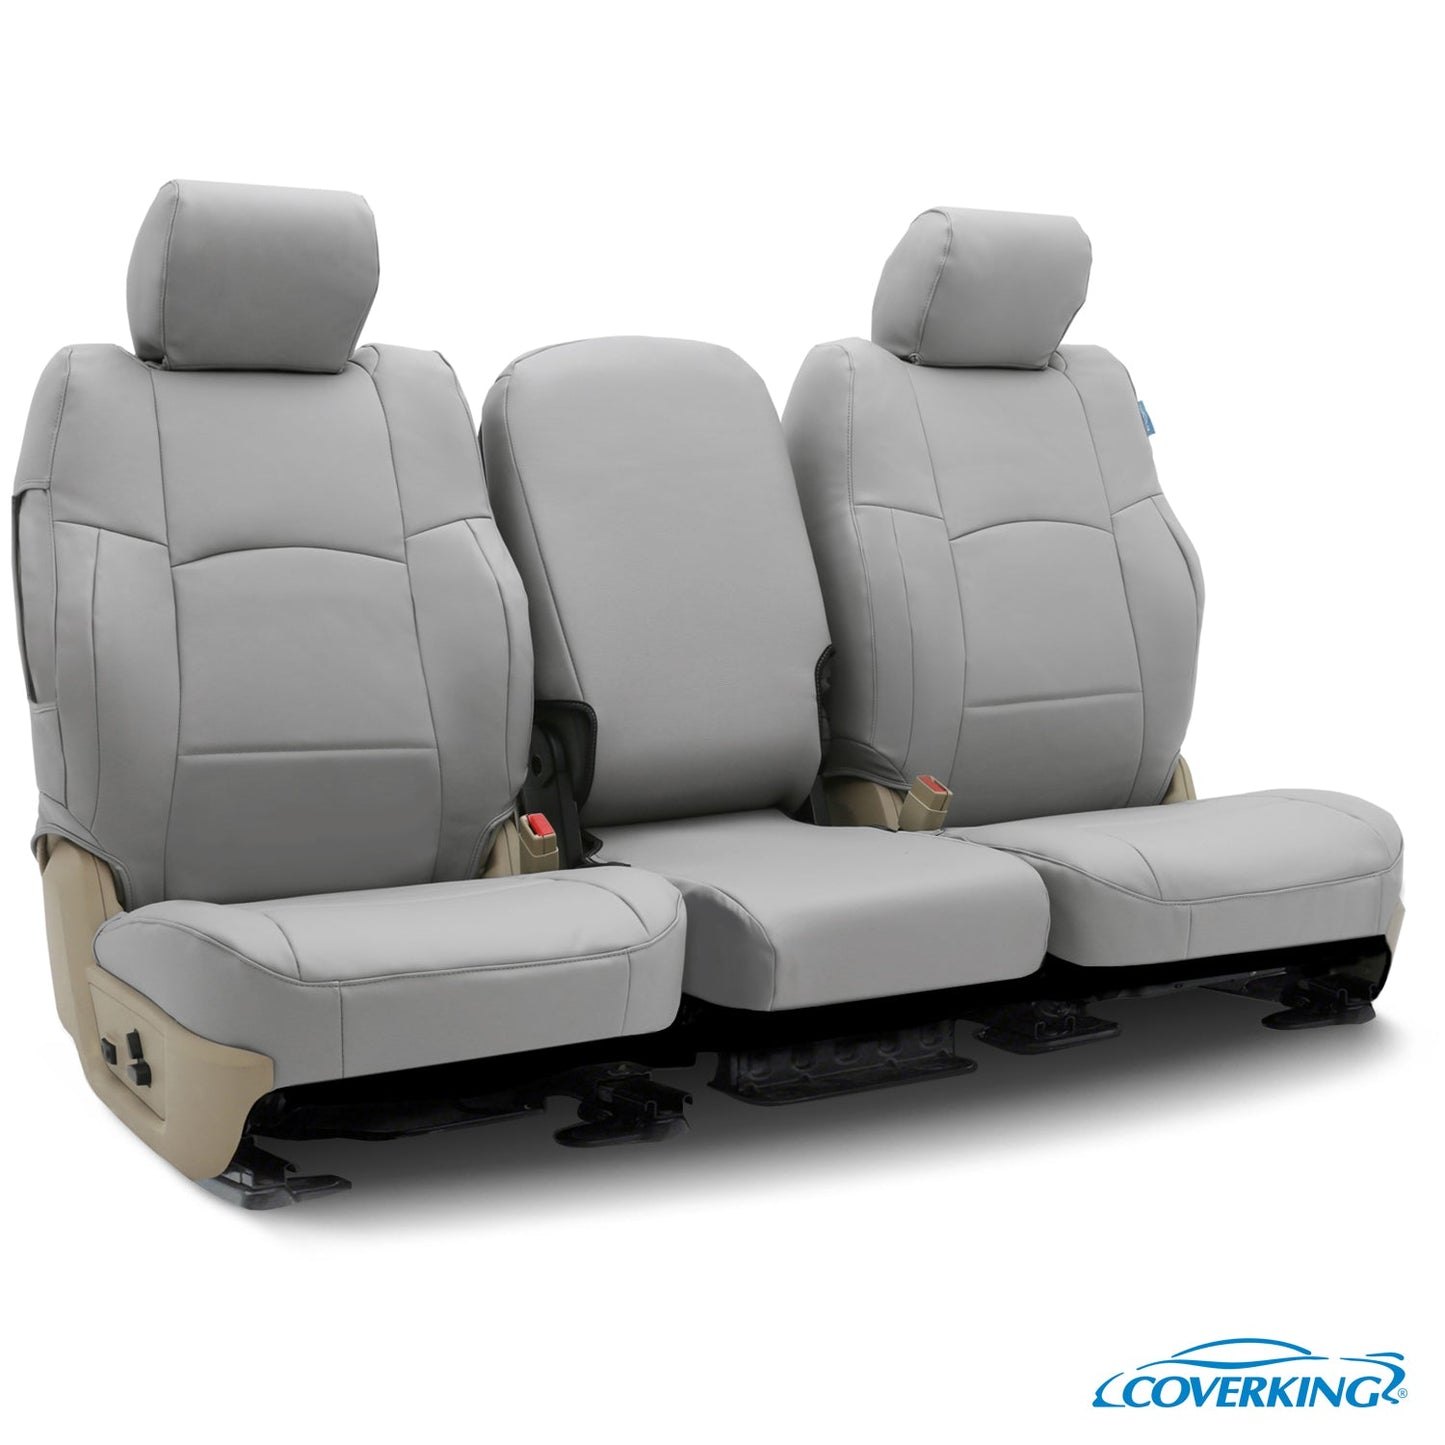 Coverking Premium Leatherette Seat Covers - Partsaccessoriesusa